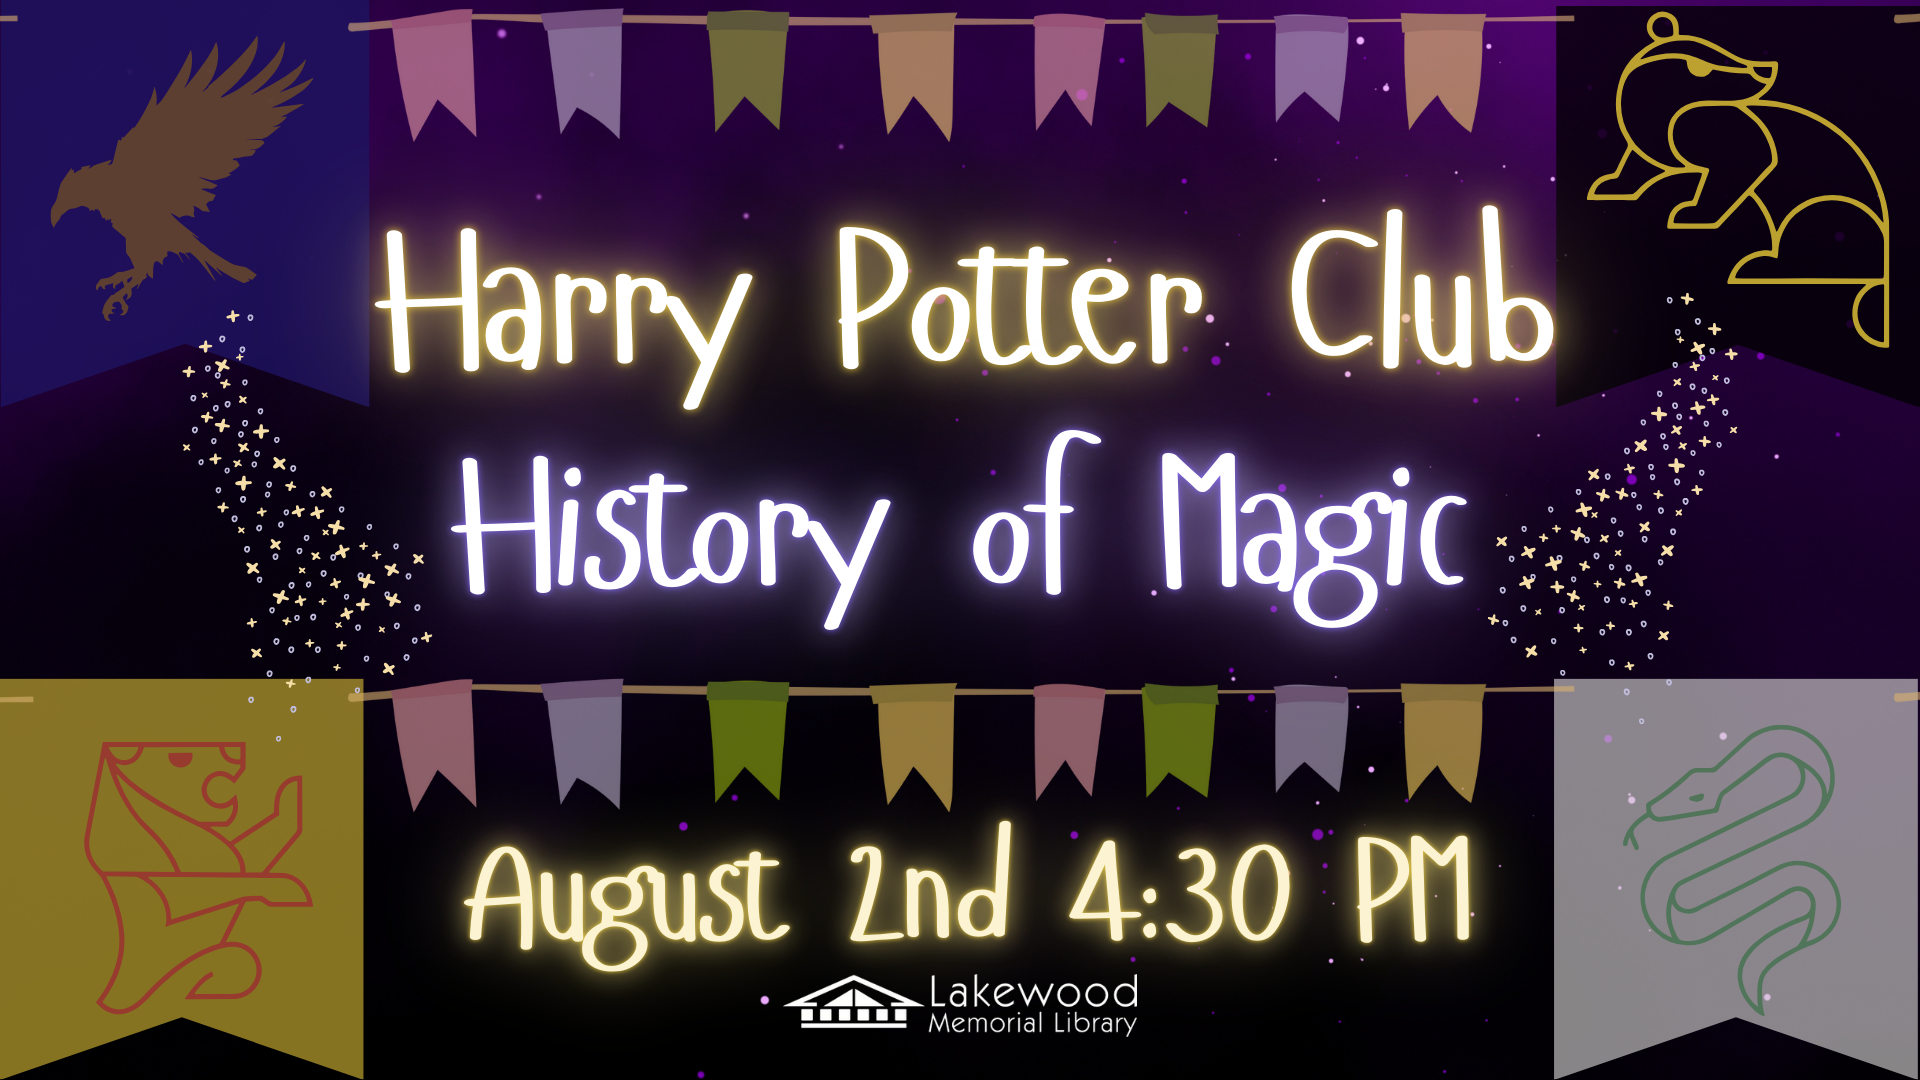 Harry Potter Club presents HISTORY OF MAGIC